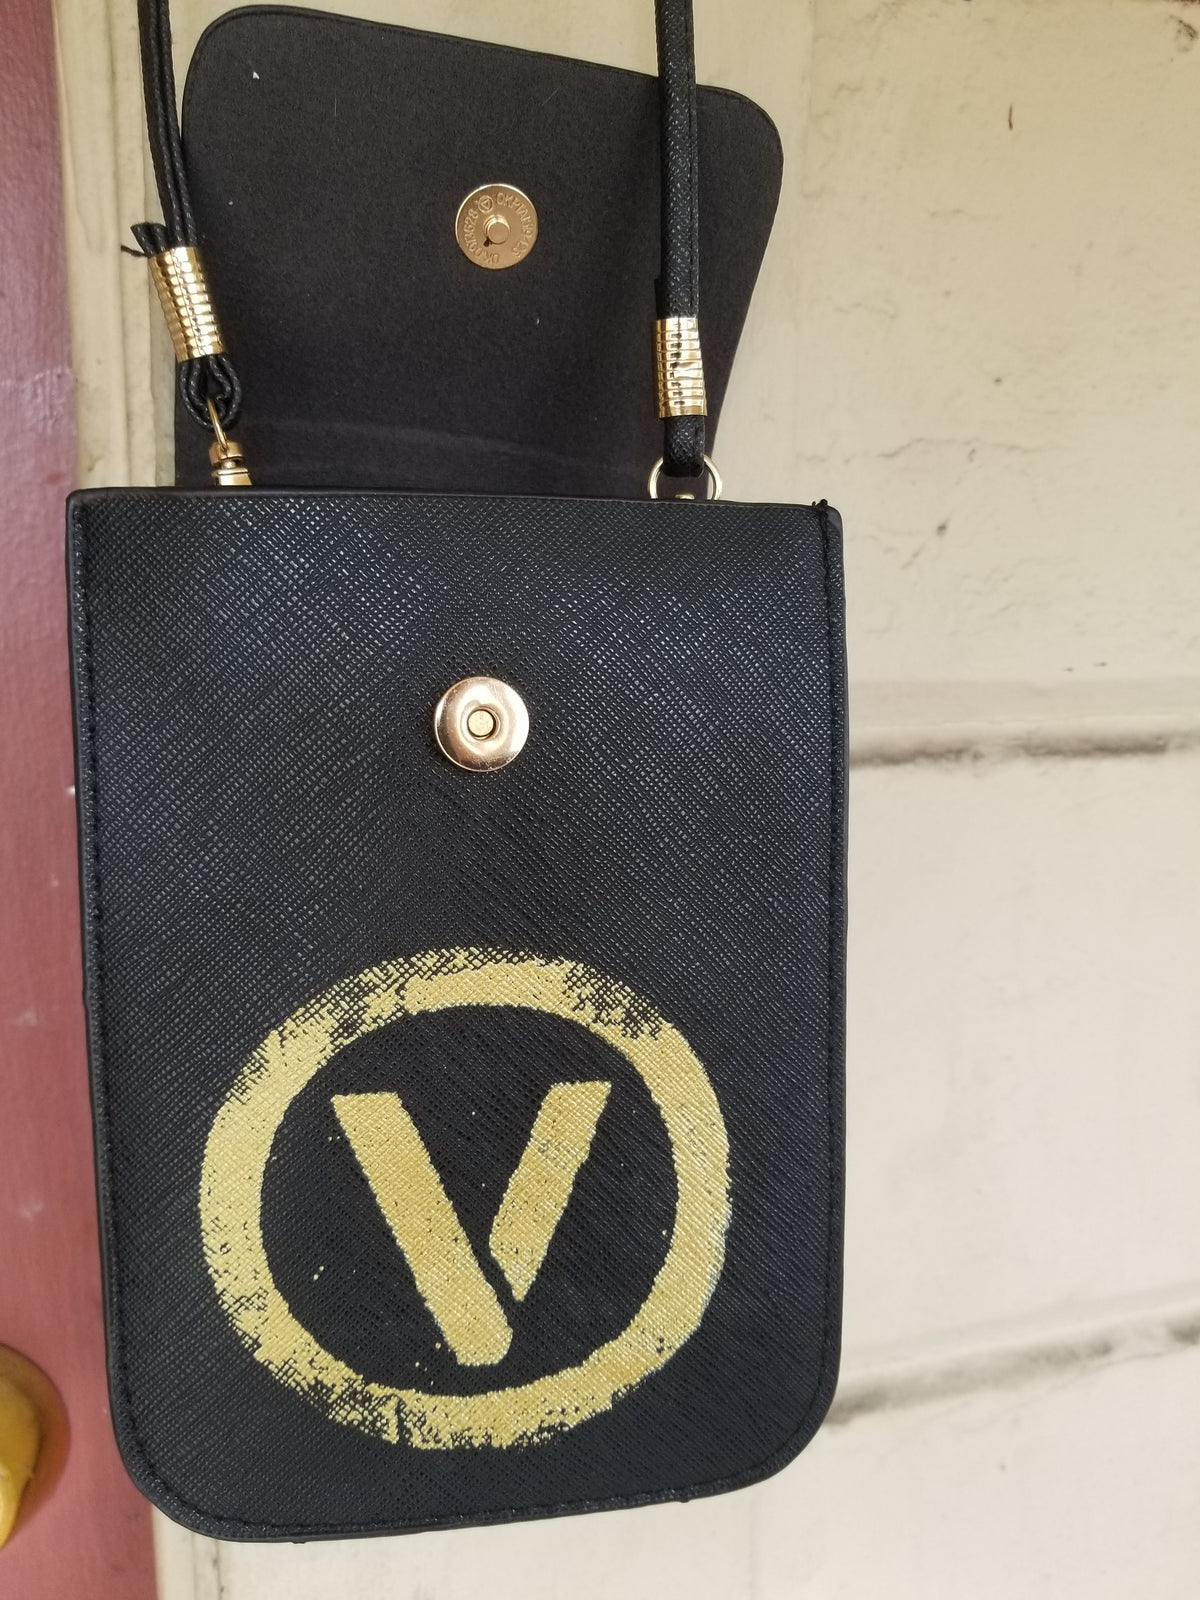 Up-cycled Vegan Leather Black Bag